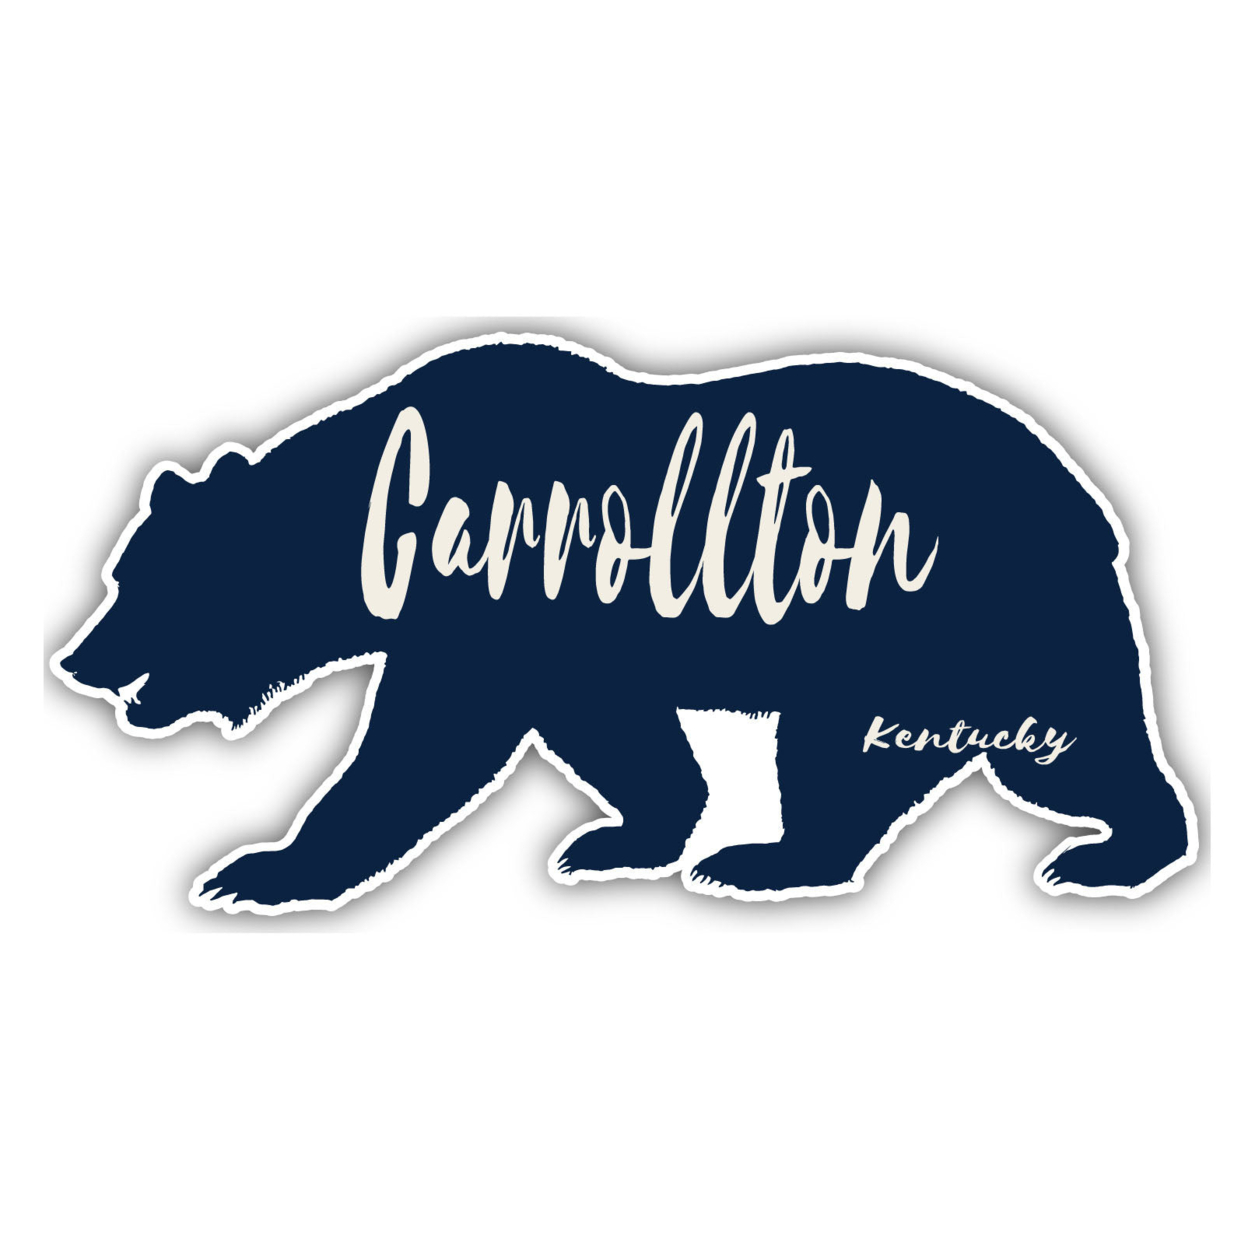 Carrollton Kentucky Souvenir Decorative Stickers (Choose Theme And Size) - Single Unit, 4-Inch, Bear